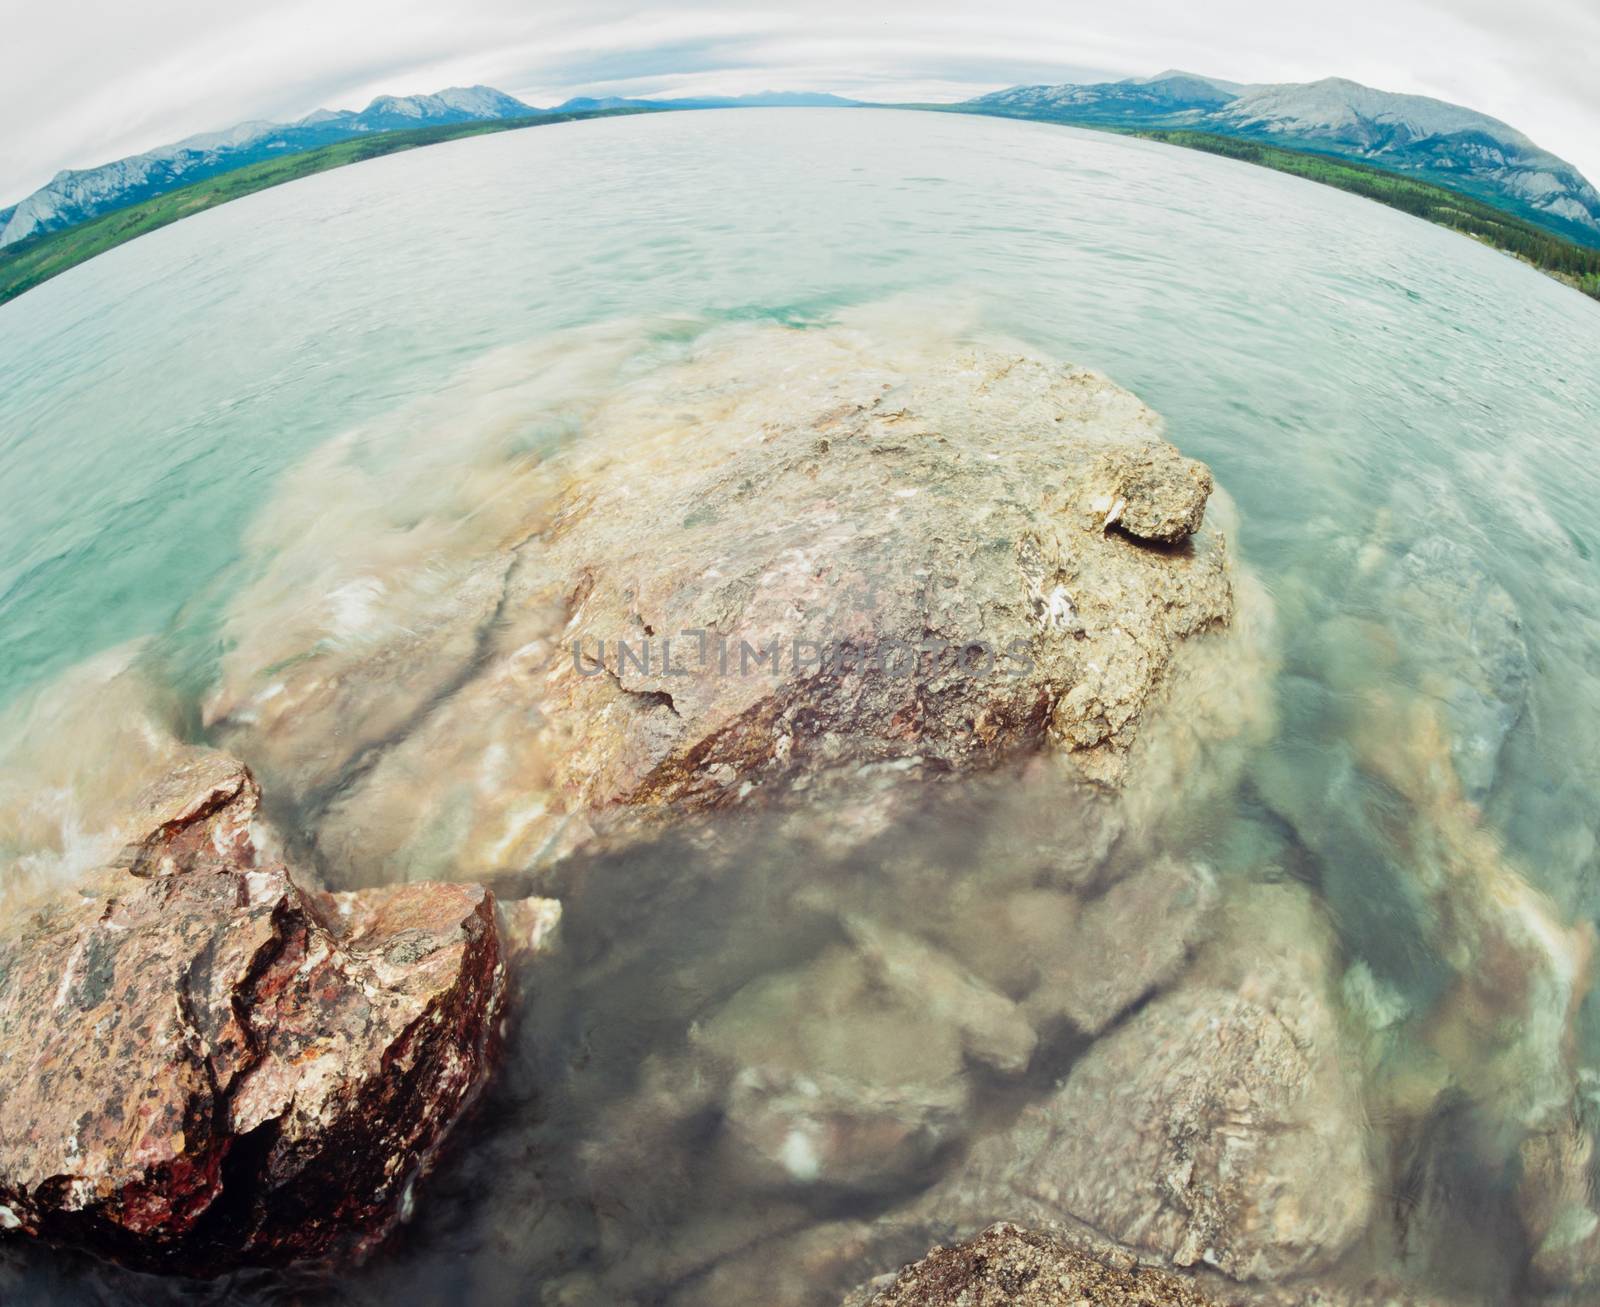 Extreme fisheye wide angle view of Tagish Lake water surface landscape, Yukon Territory, Canada